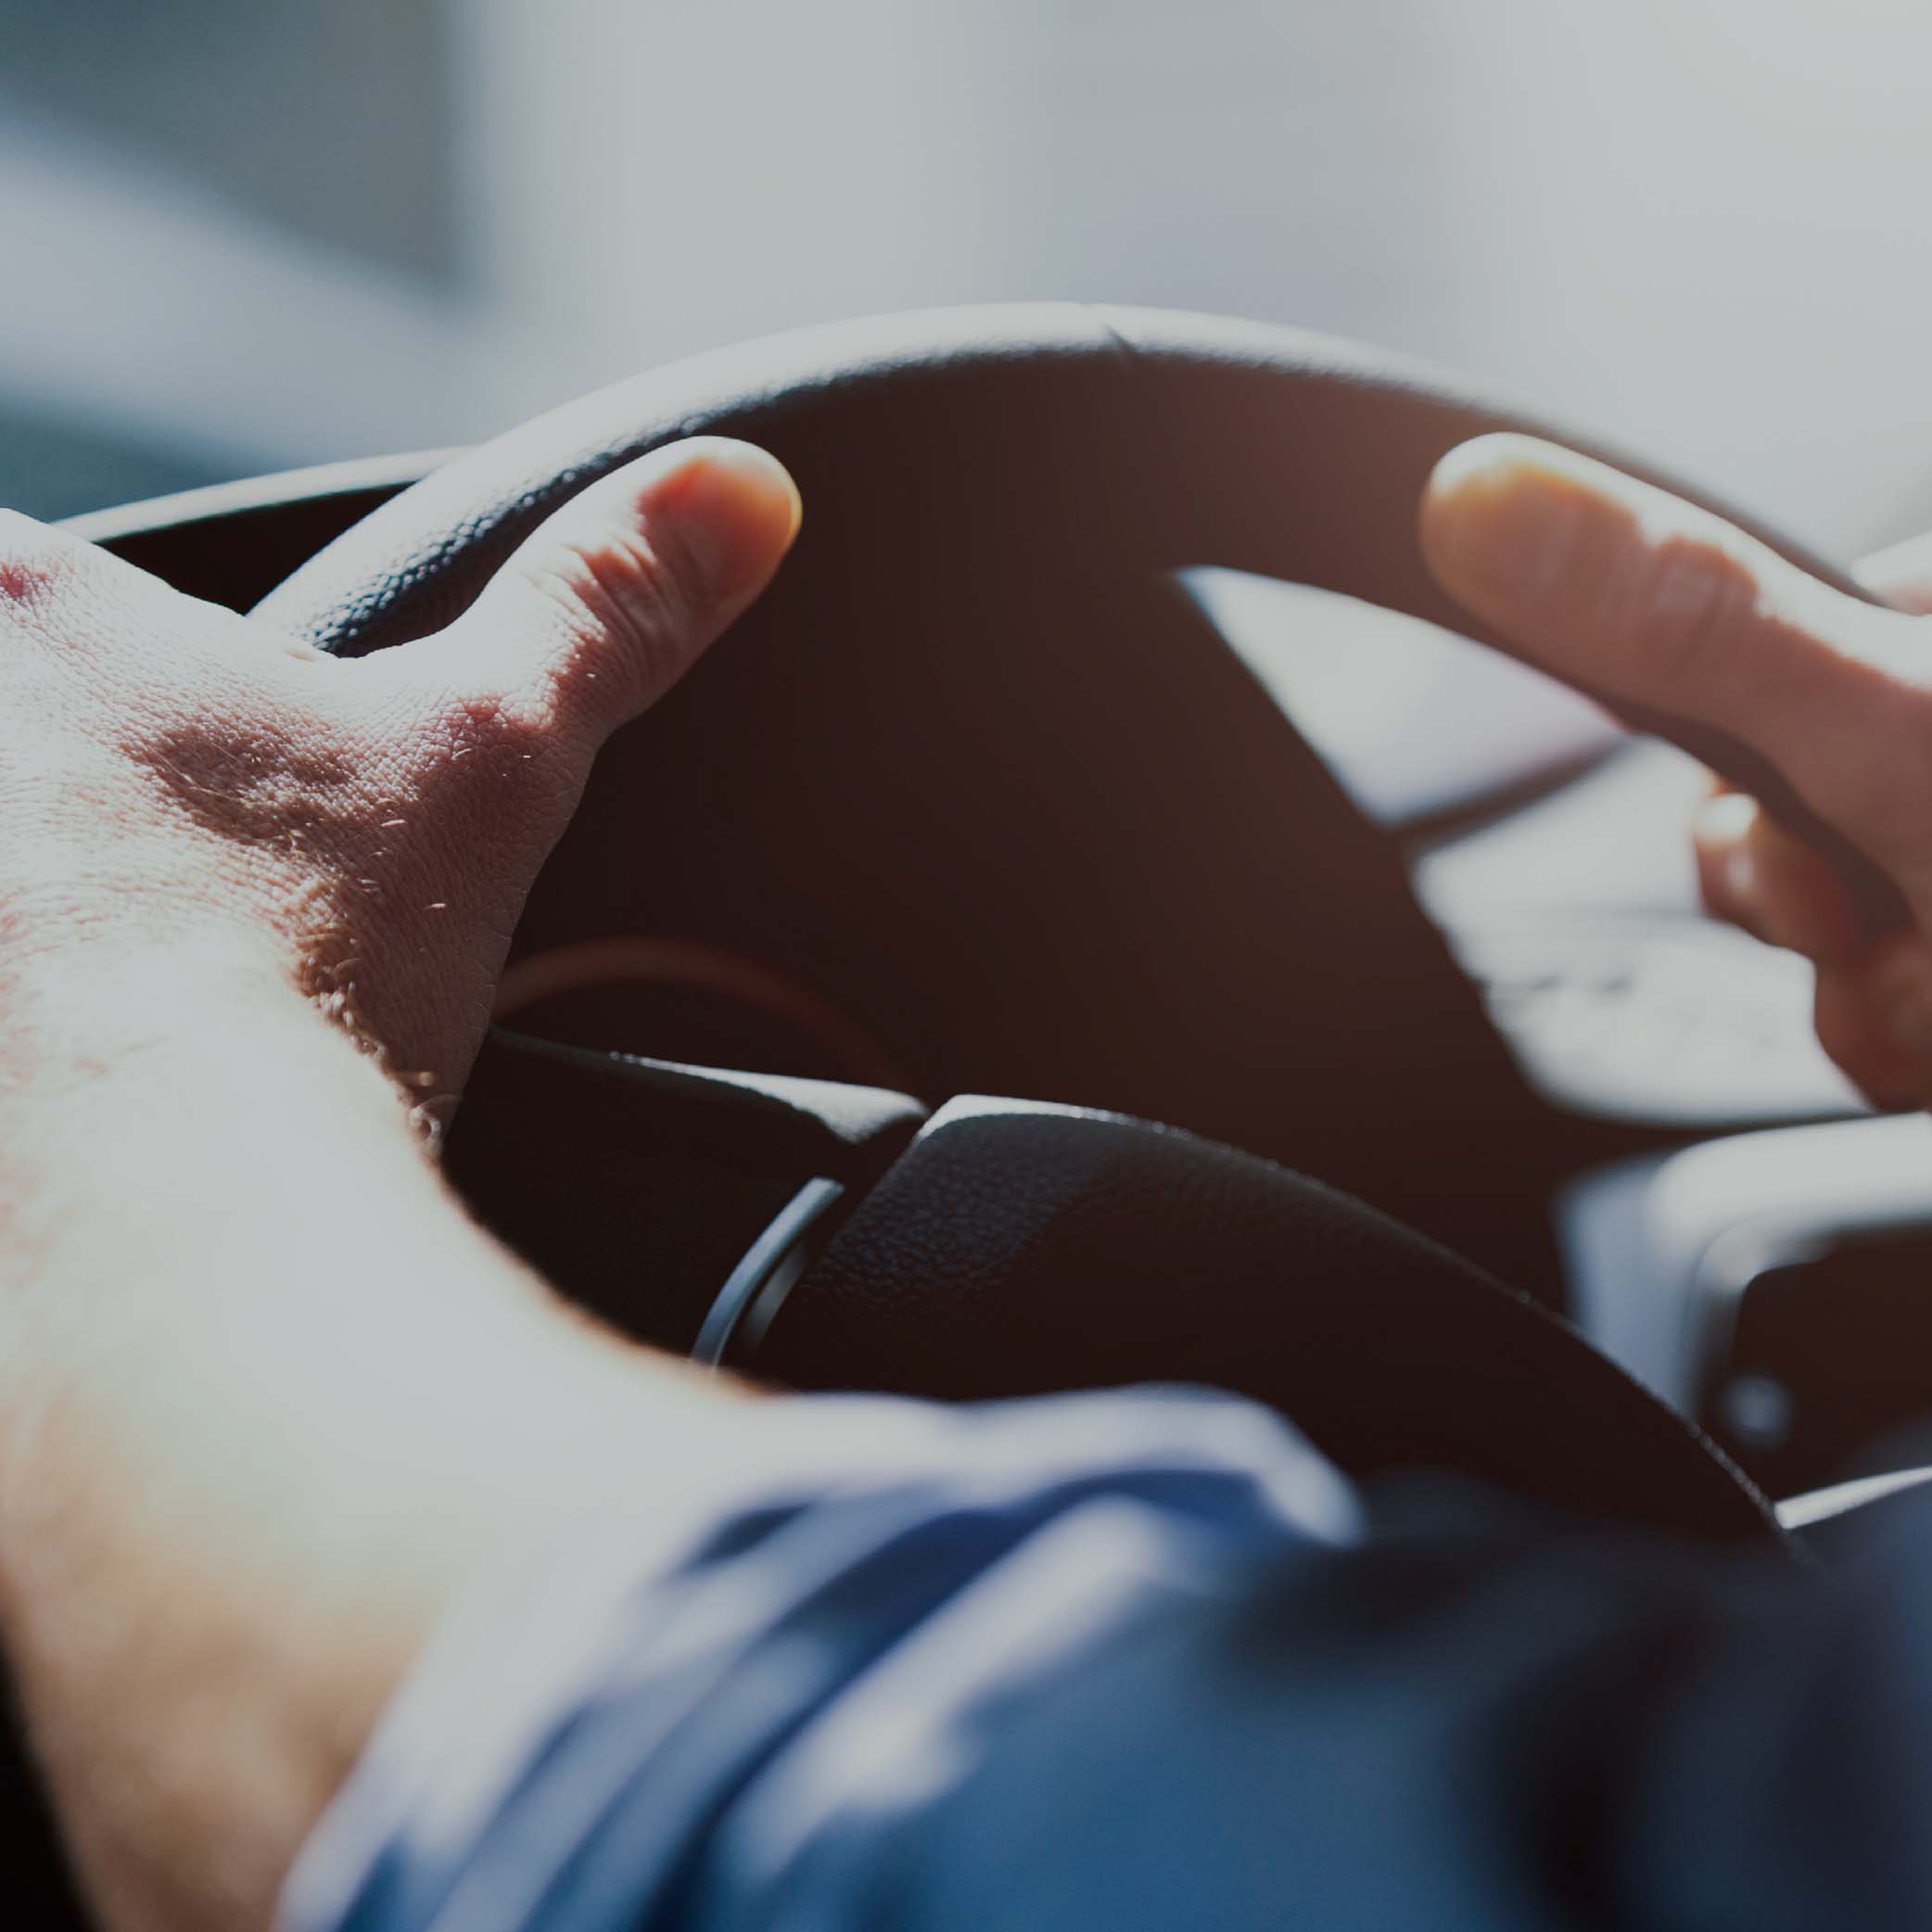 Maserati hands on steering wheel image